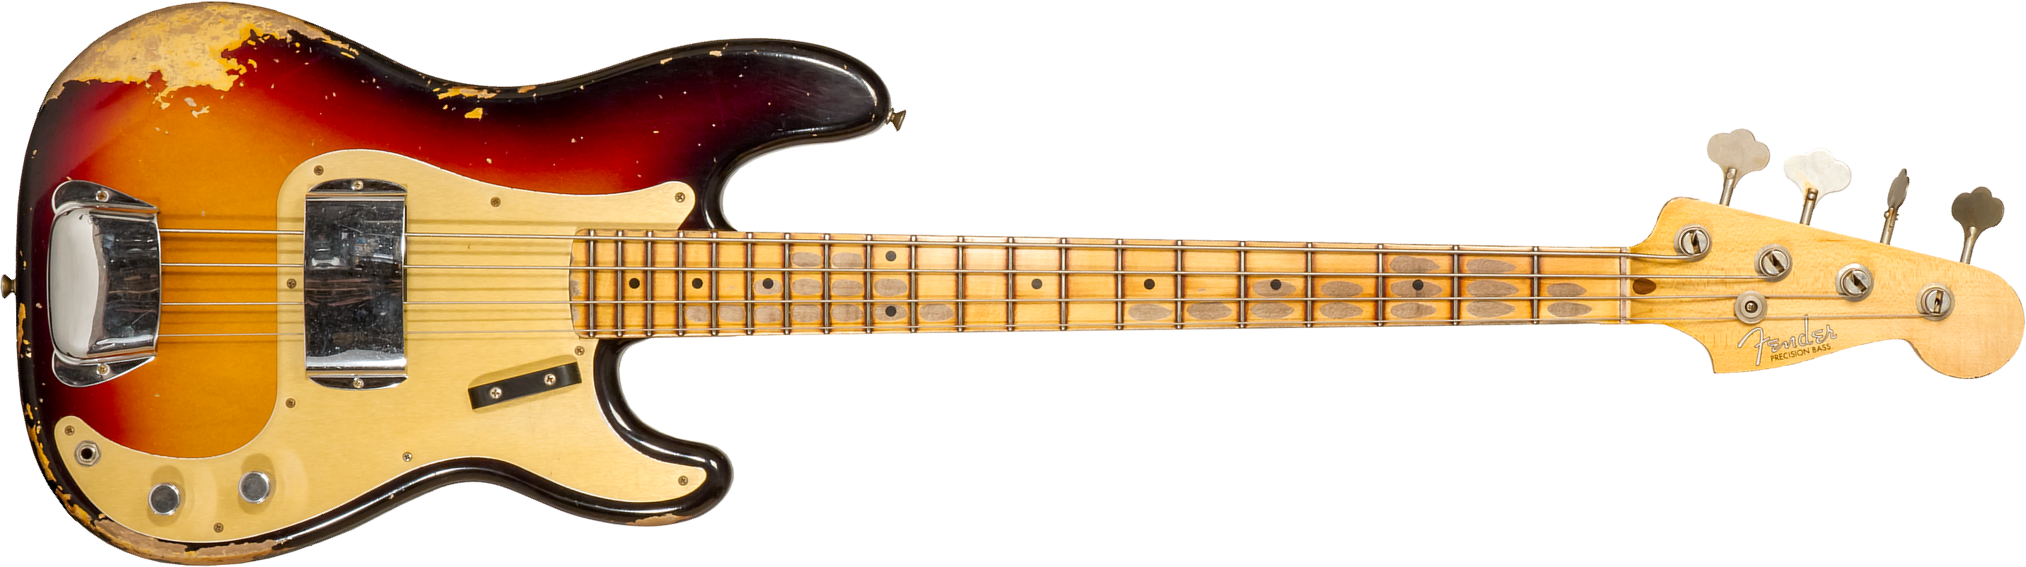 Fender Custom Shop Precision Bass 1958 Mn #cz573256 - Heavy Relic 3-color Sunburst - Bajo eléctrico de cuerpo sólido - Main picture